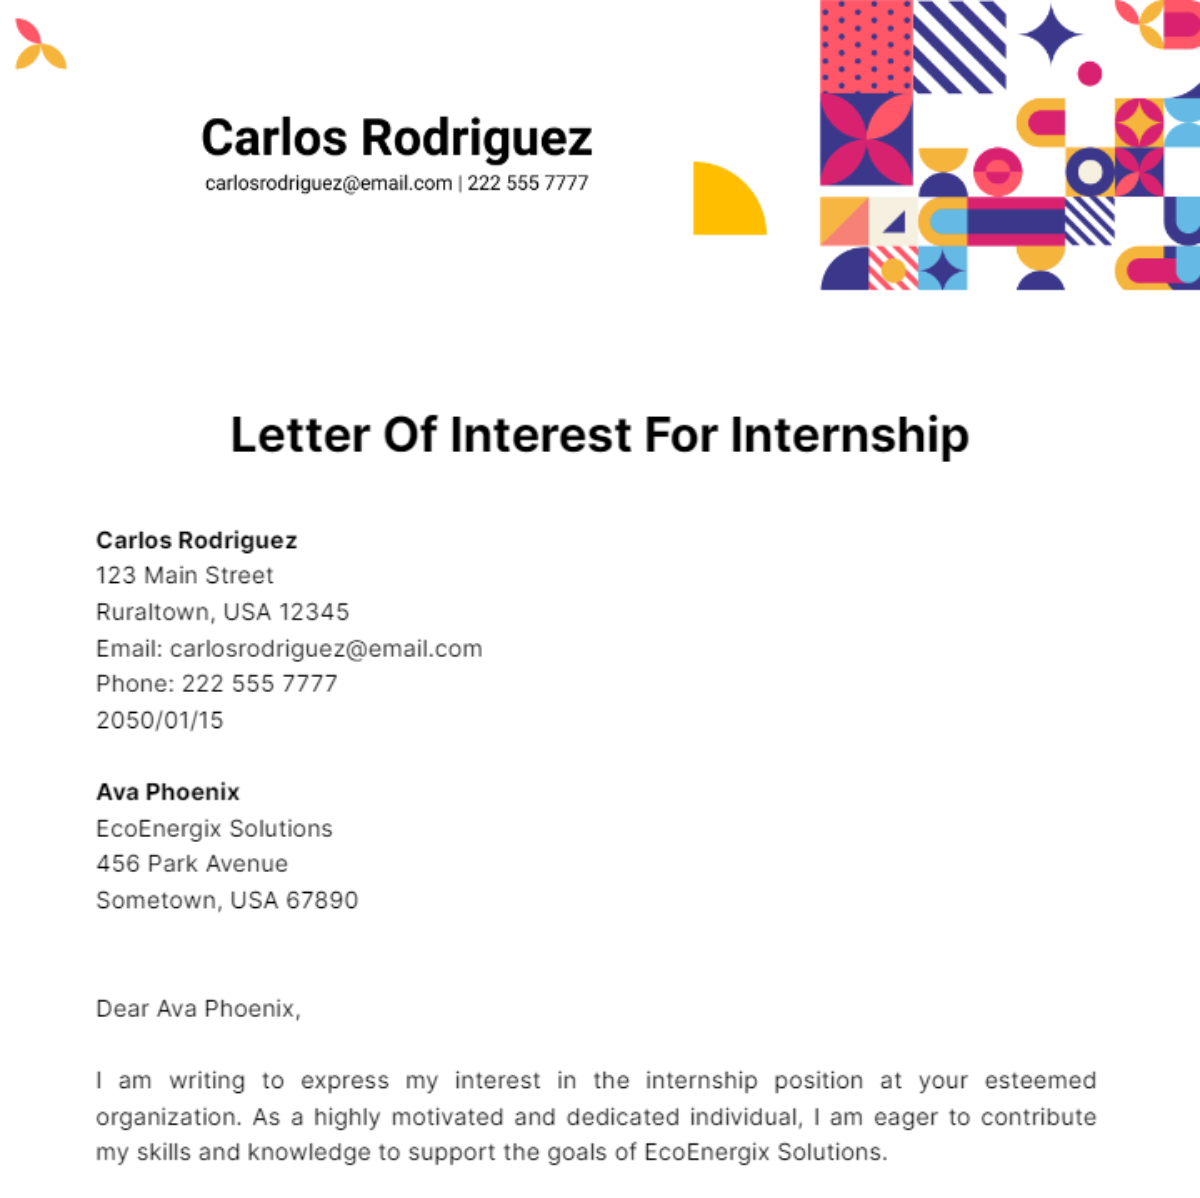 Letter Of Interest For Internship Template